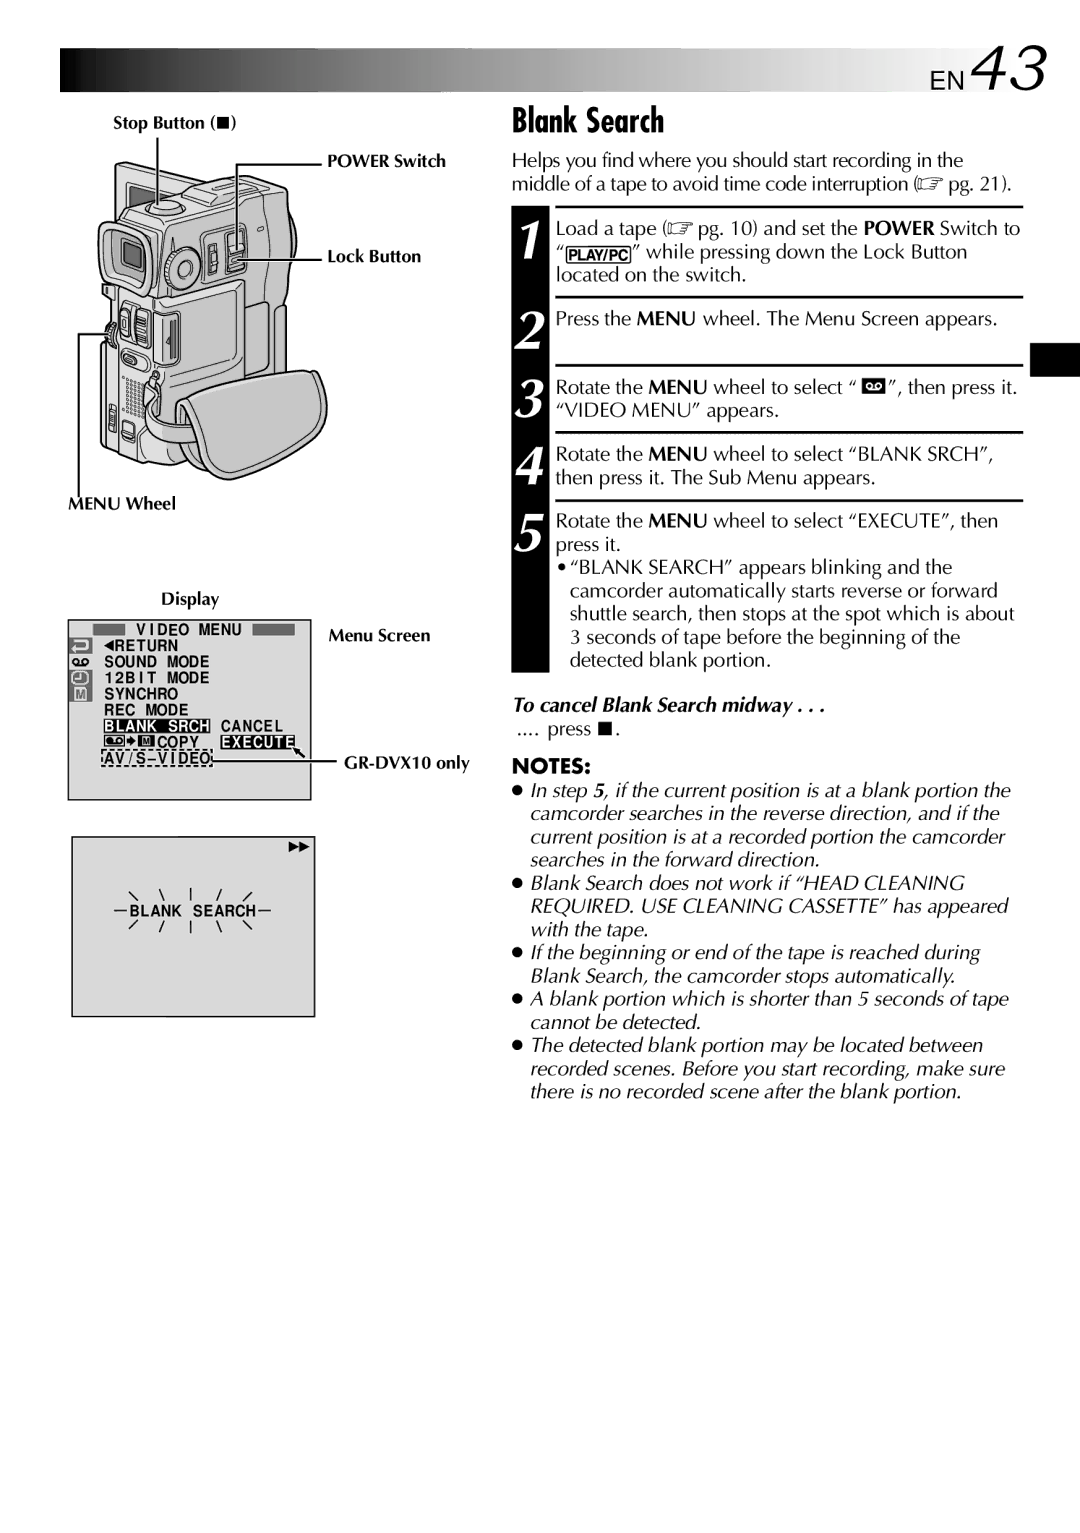 JVC GR-DVX9 specifications EN43, Video Menu appears, To cancel Blank Search midway, Press 